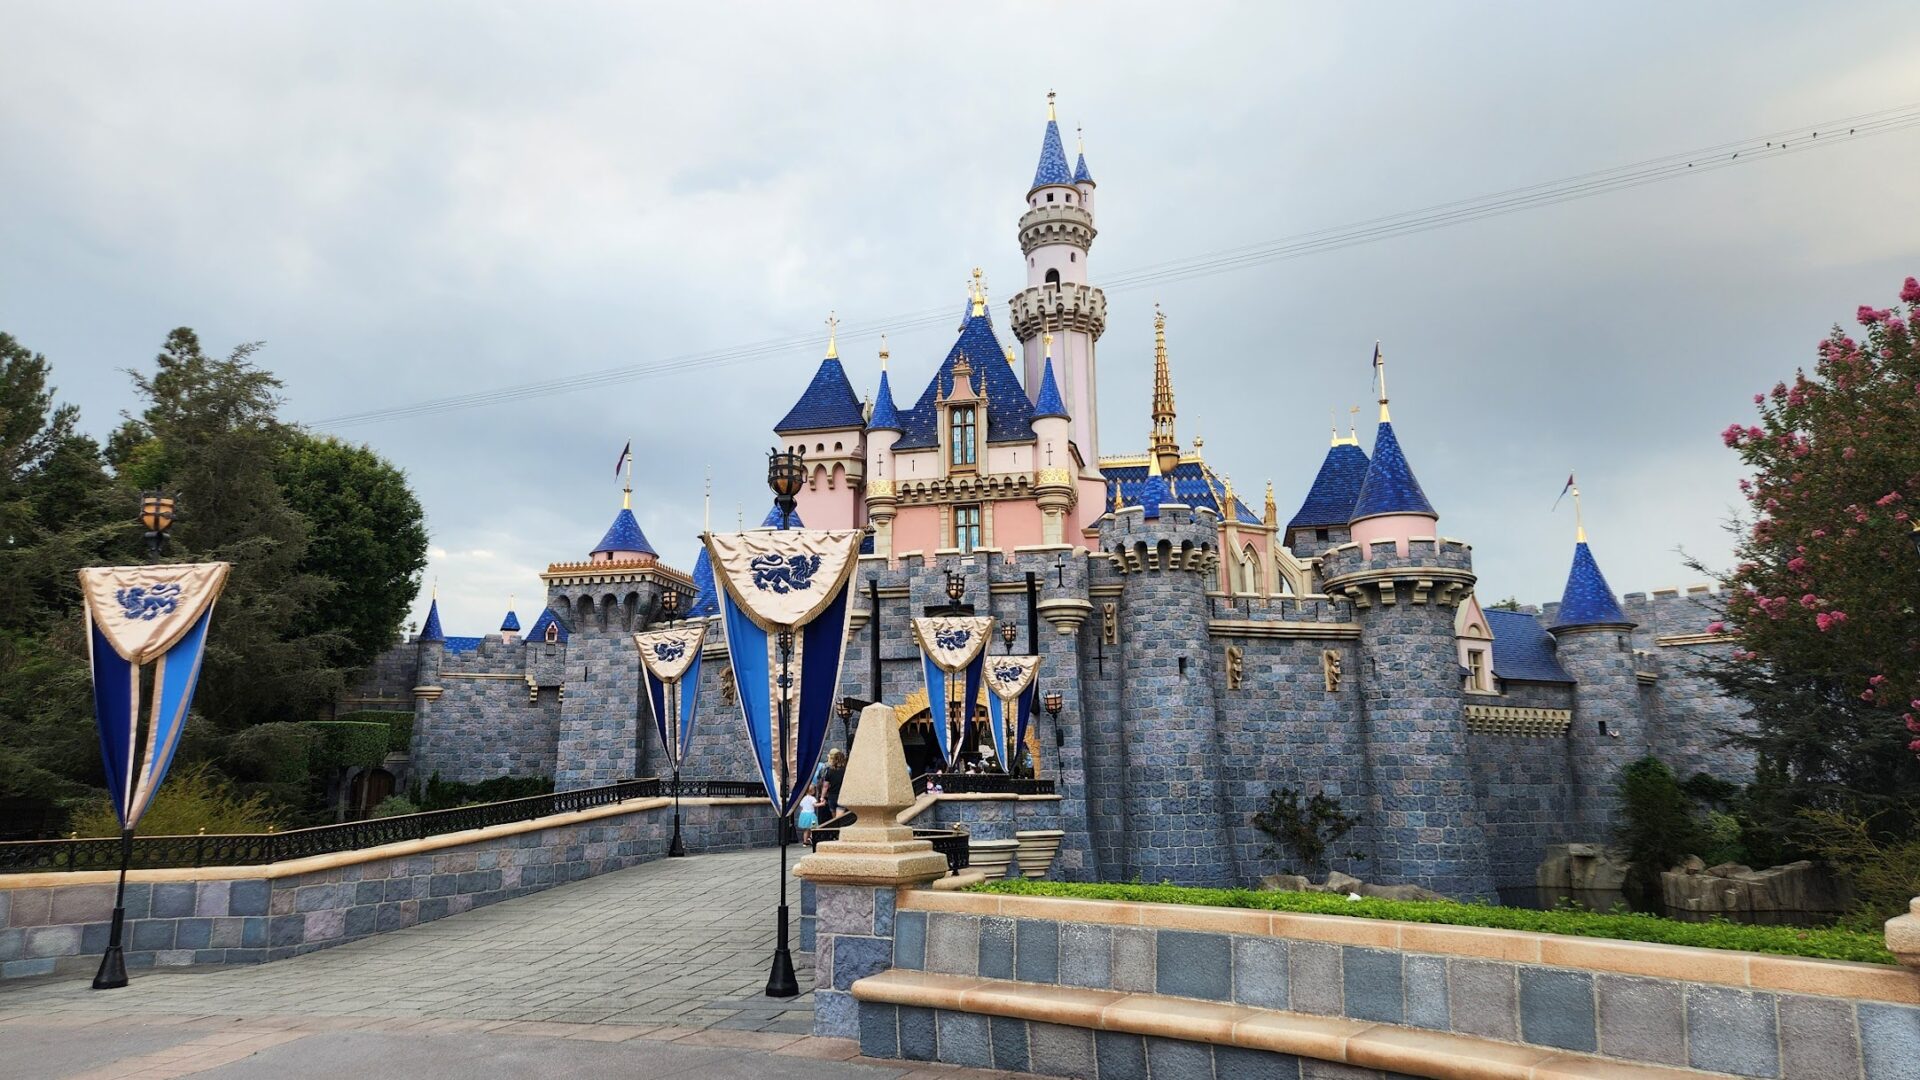 Three Big Disneyland Attractions Closing for Refurbishment in June